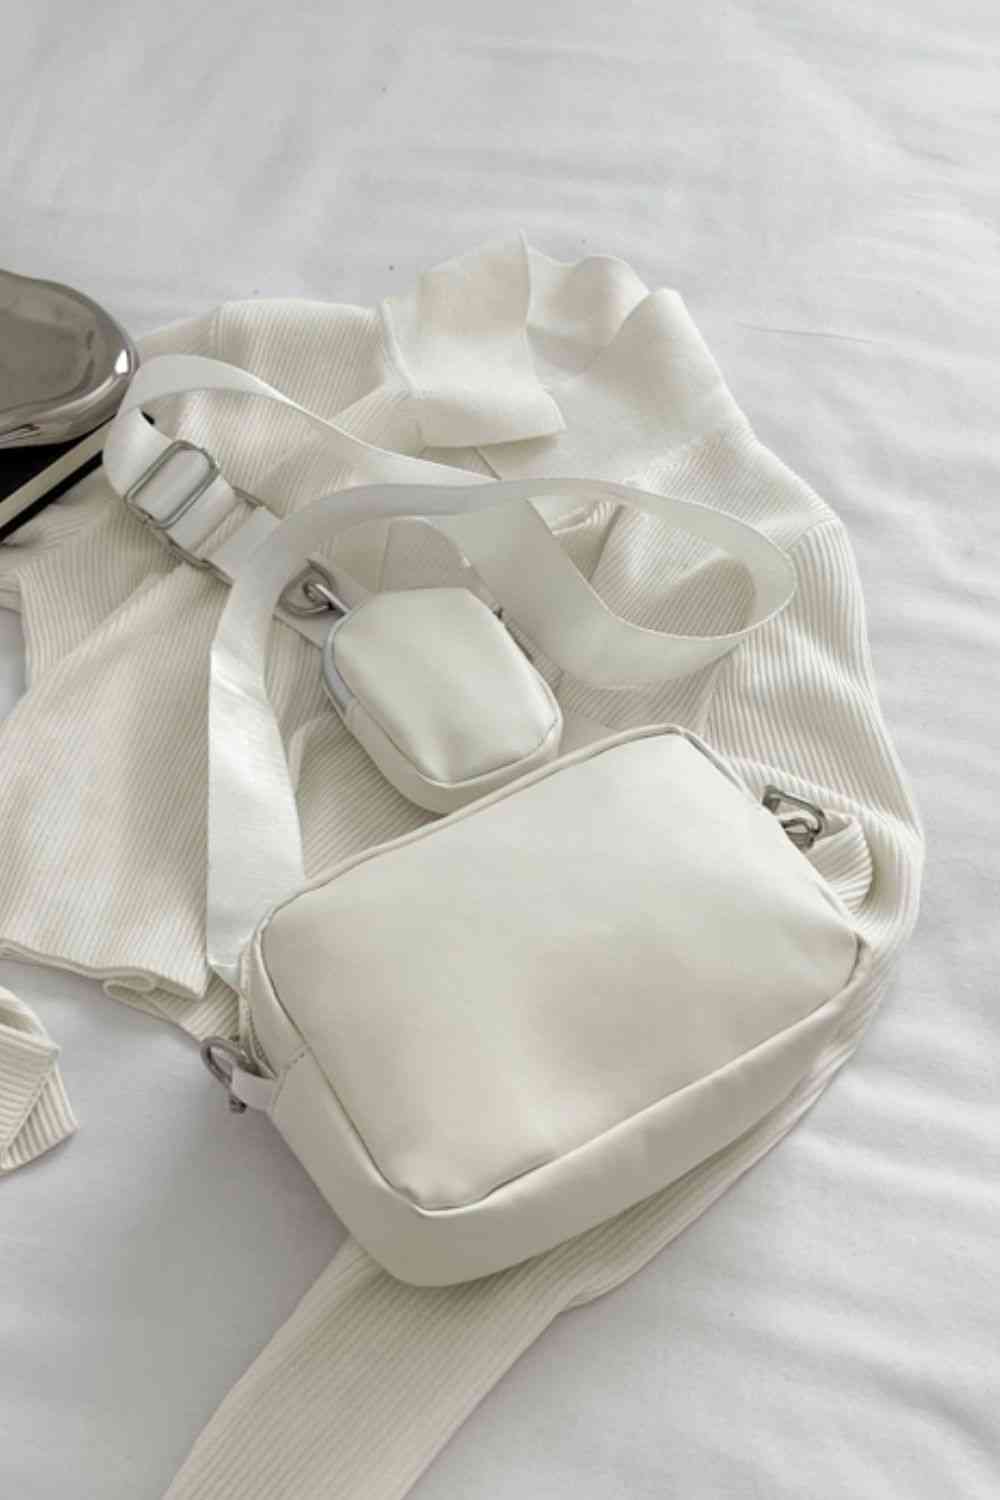 TEEK - AdoringShoulder Bag with Small Purse BAG TEEK Trend   